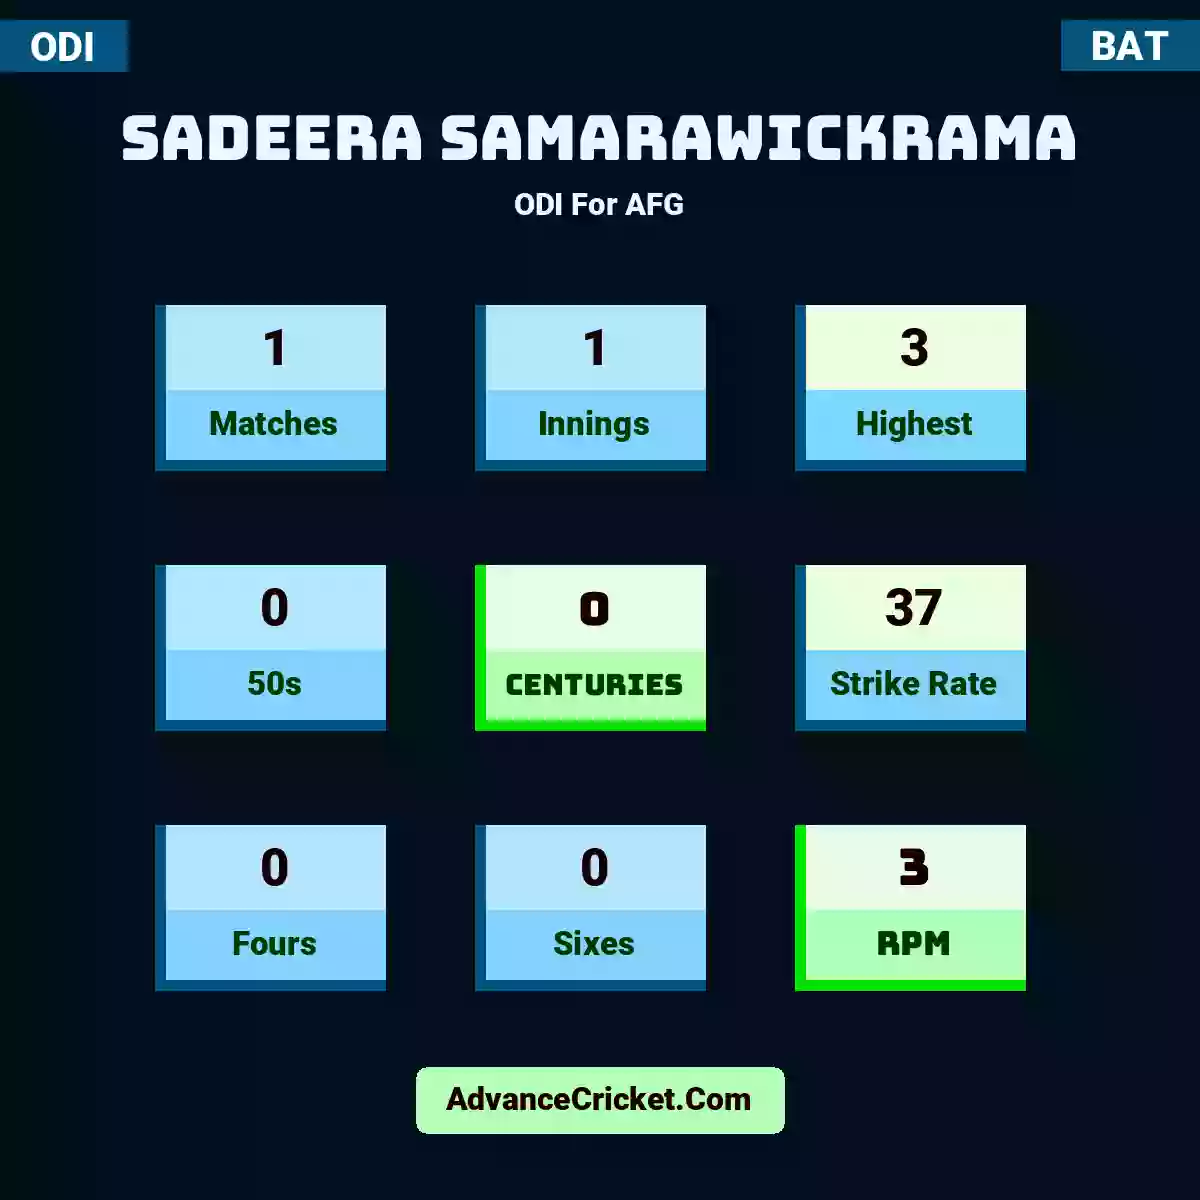 Sadeera Samarawickrama ODI  For AFG, Sadeera Samarawickrama played 1 matches, scored 3 runs as highest, 0 half-centuries, and 0 centuries, with a strike rate of 37. S.Samarawickrama hit 0 fours and 0 sixes, with an RPM of 3.